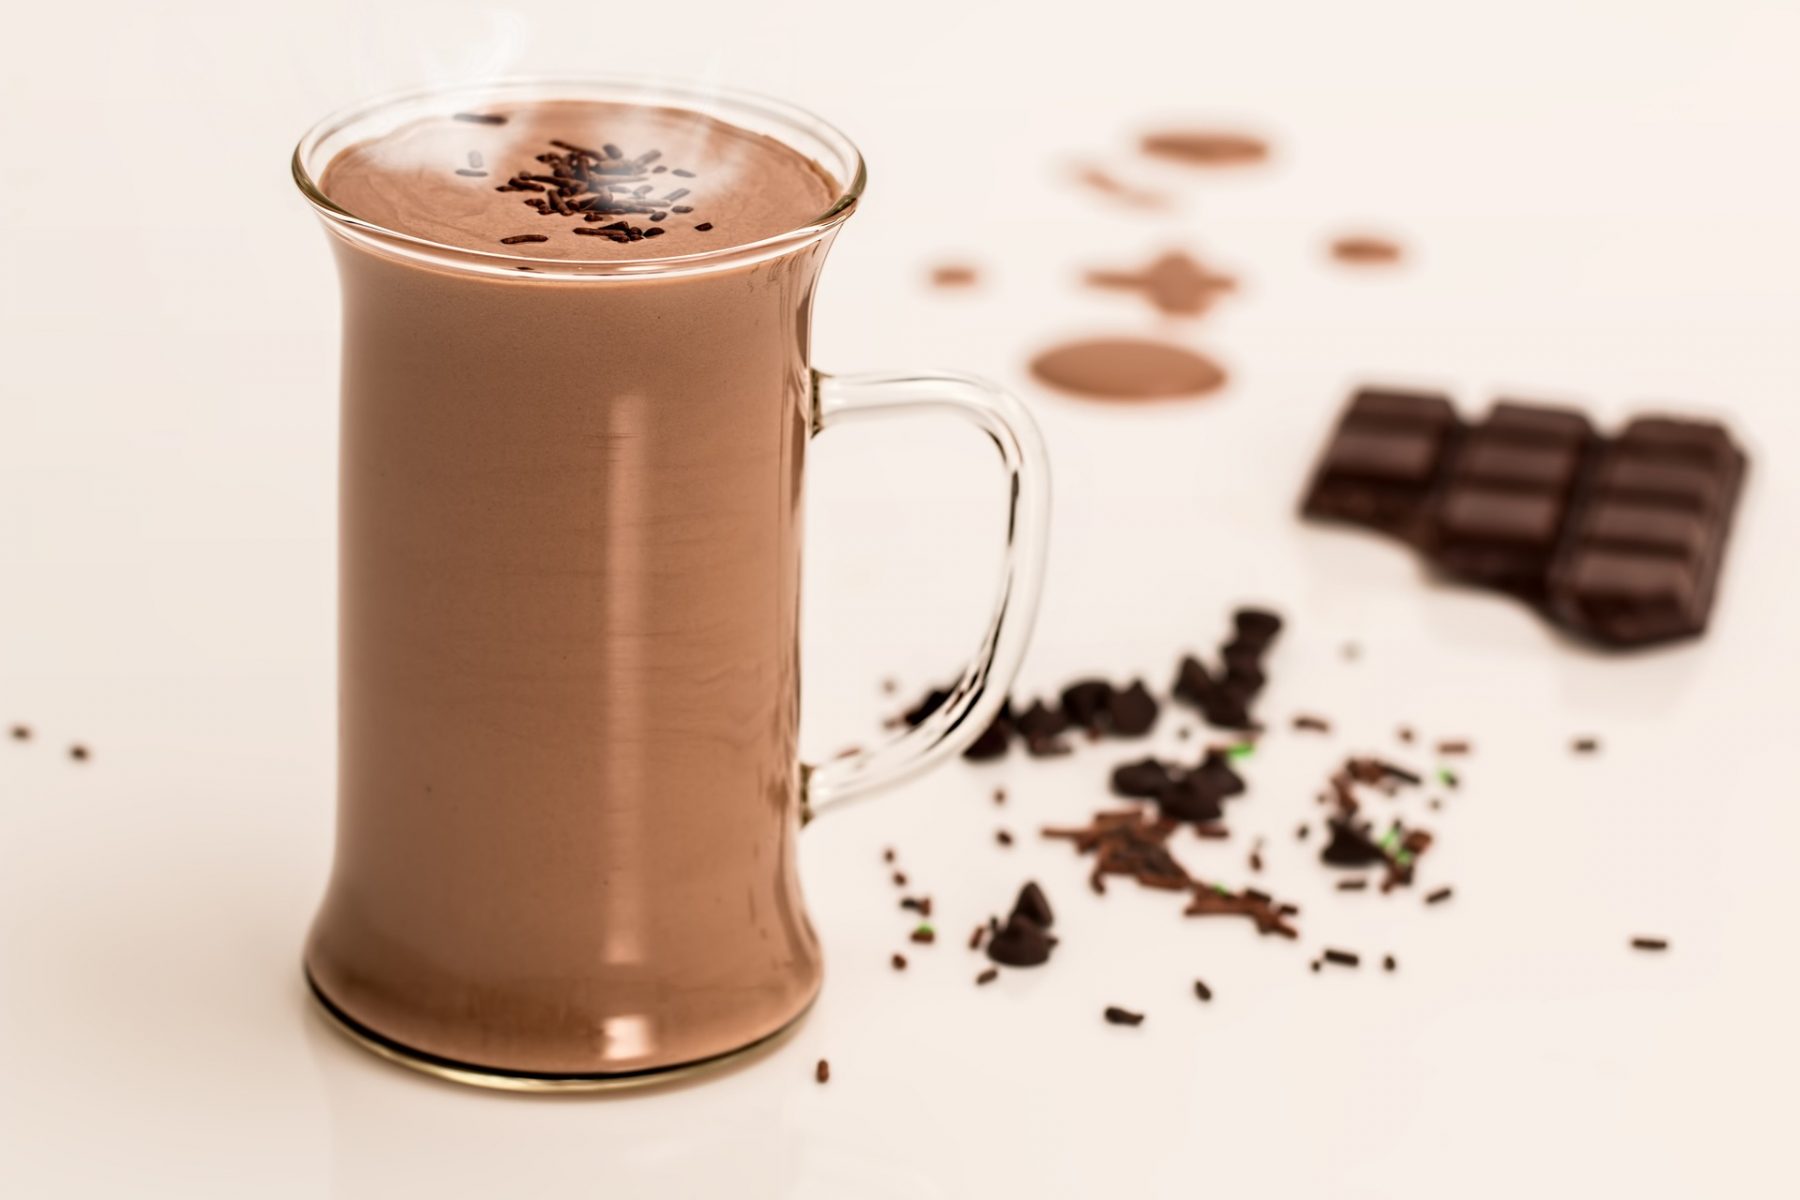 DIY σοκολατούχο γάλα αμυγδάλου: Μια πεντανόστιμη συνταγή που μπορείτε να φτιάξετε μόνοι σας στο σπίτι